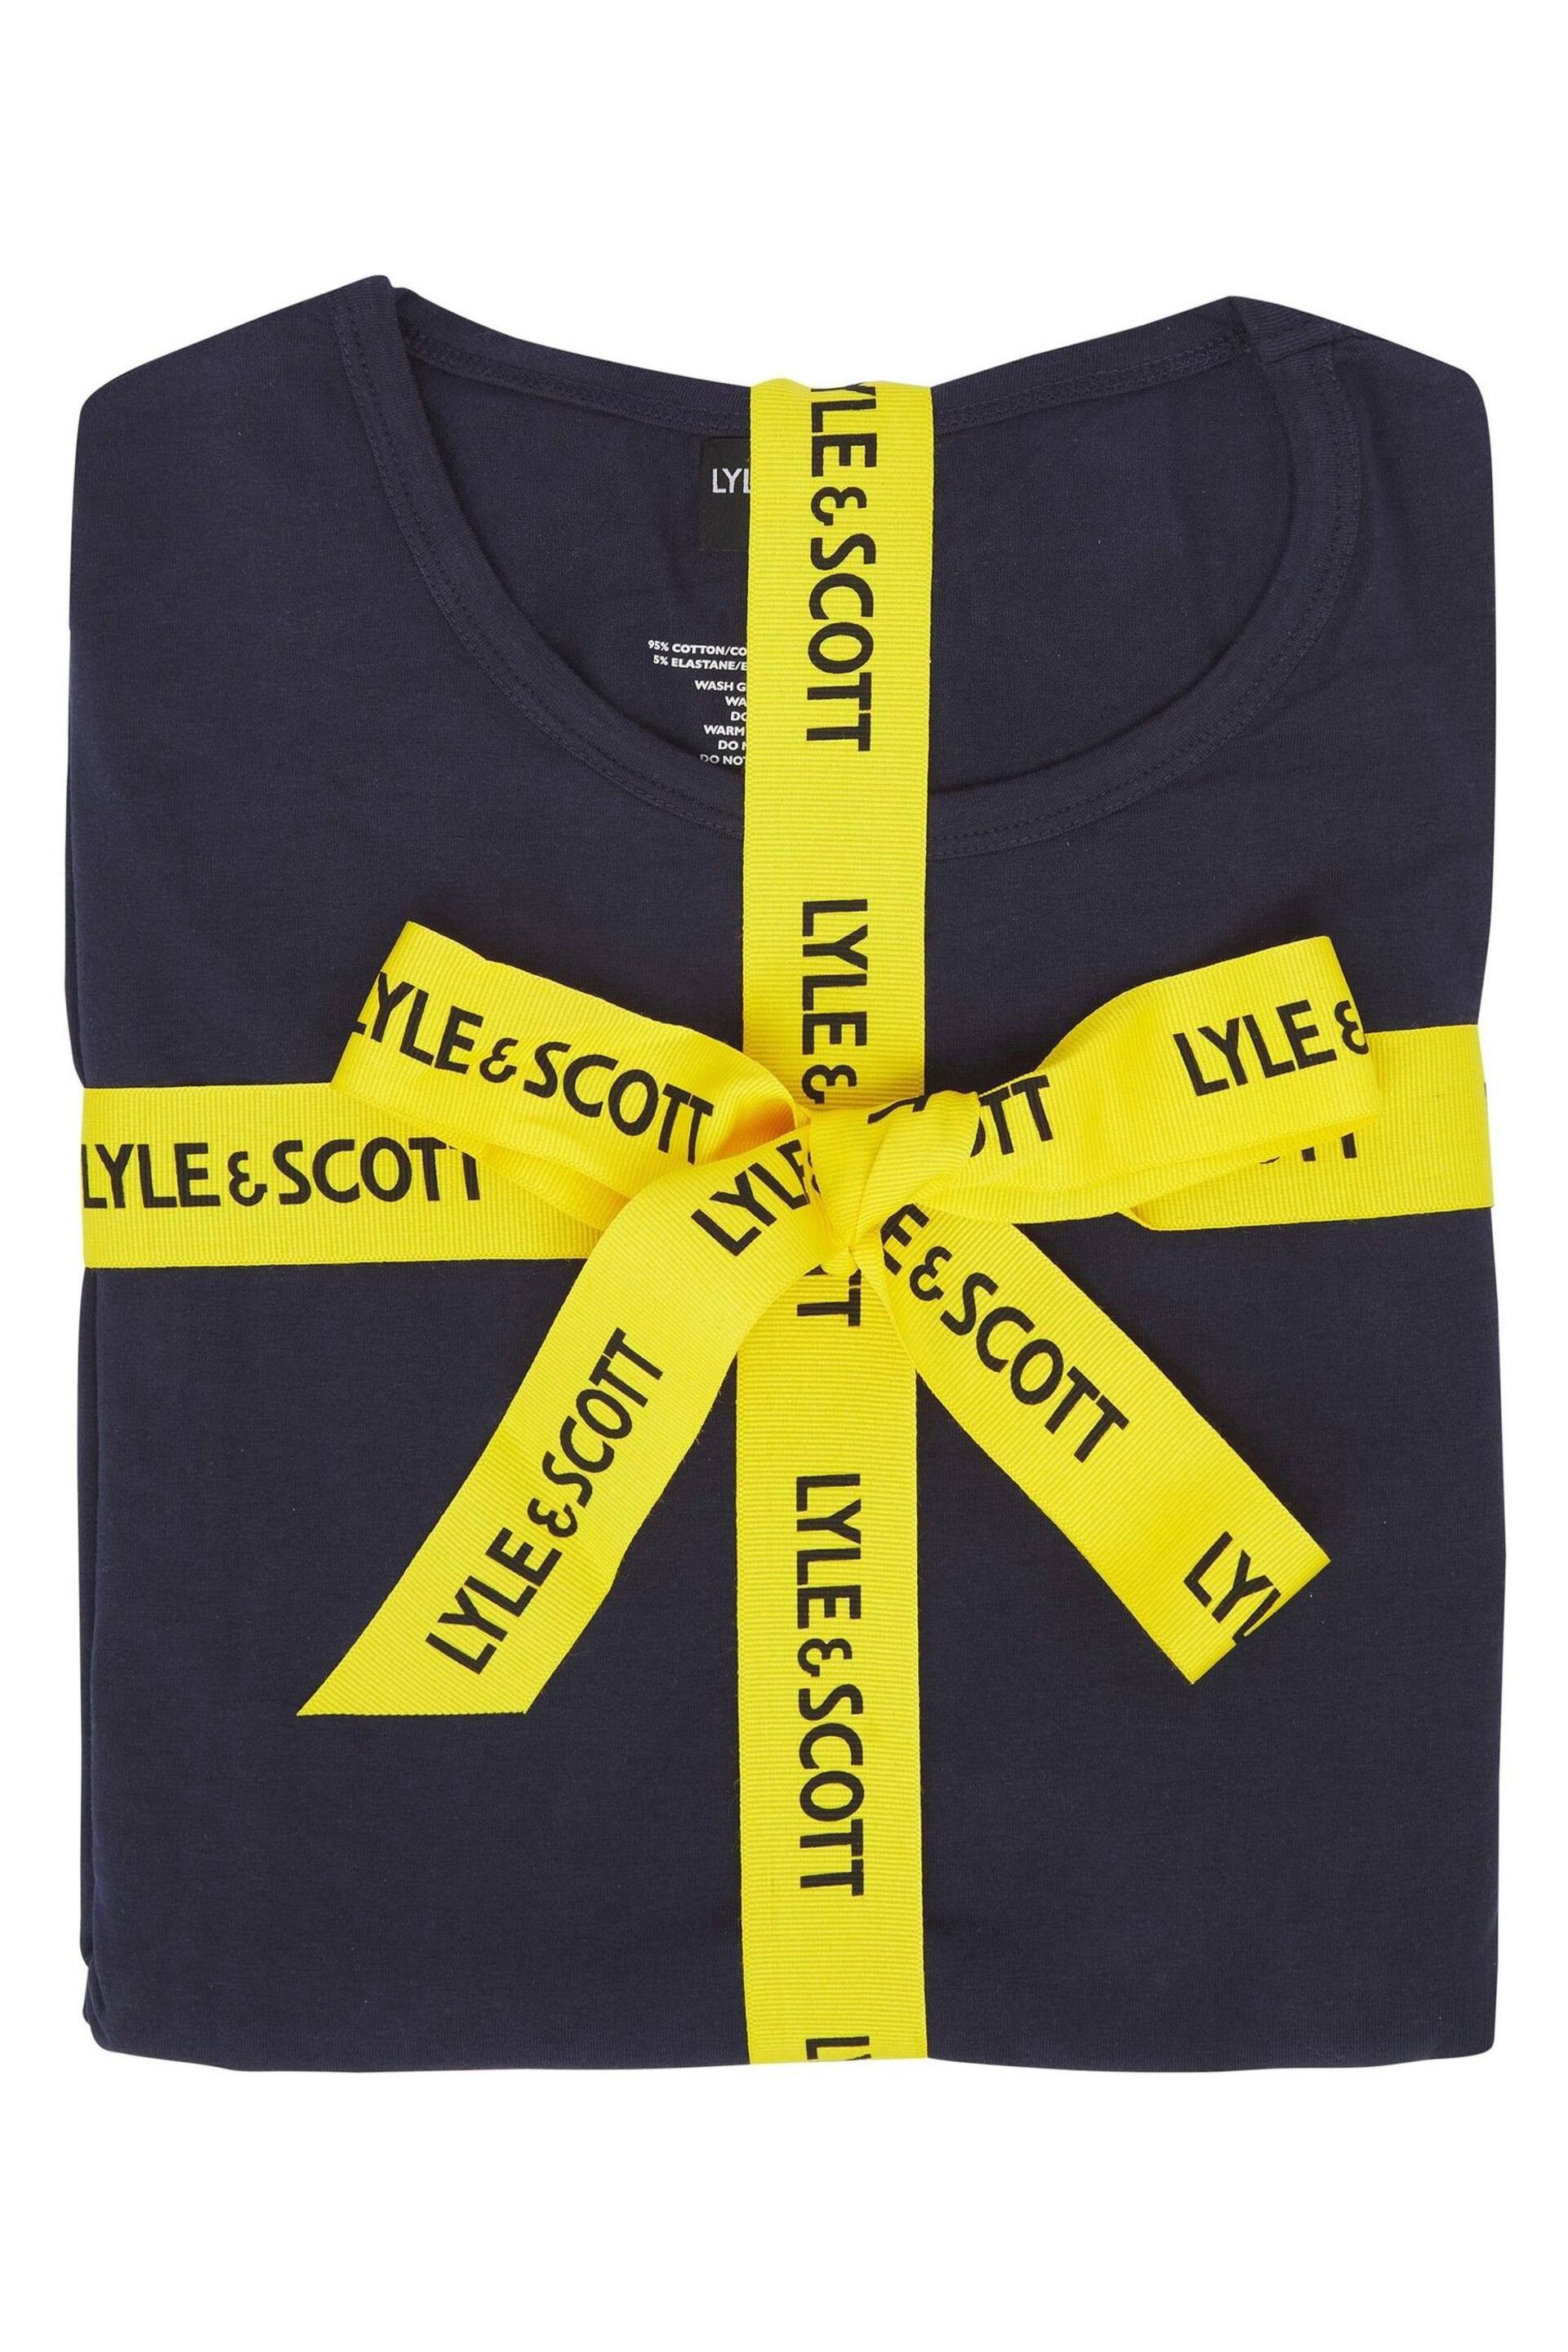 Lyle & Scott Brent Loungewear Set - Image 6 of 6